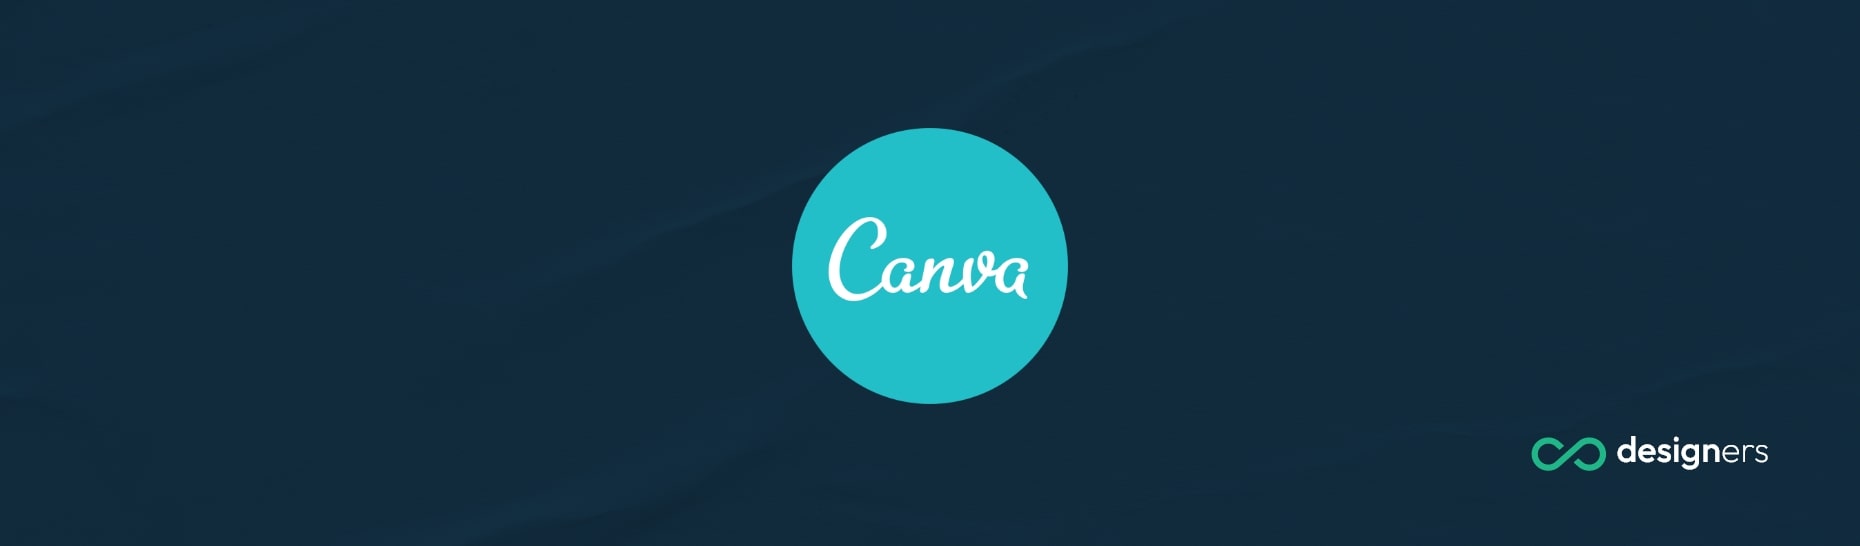 Is Canva a Digital Marketing Tool?